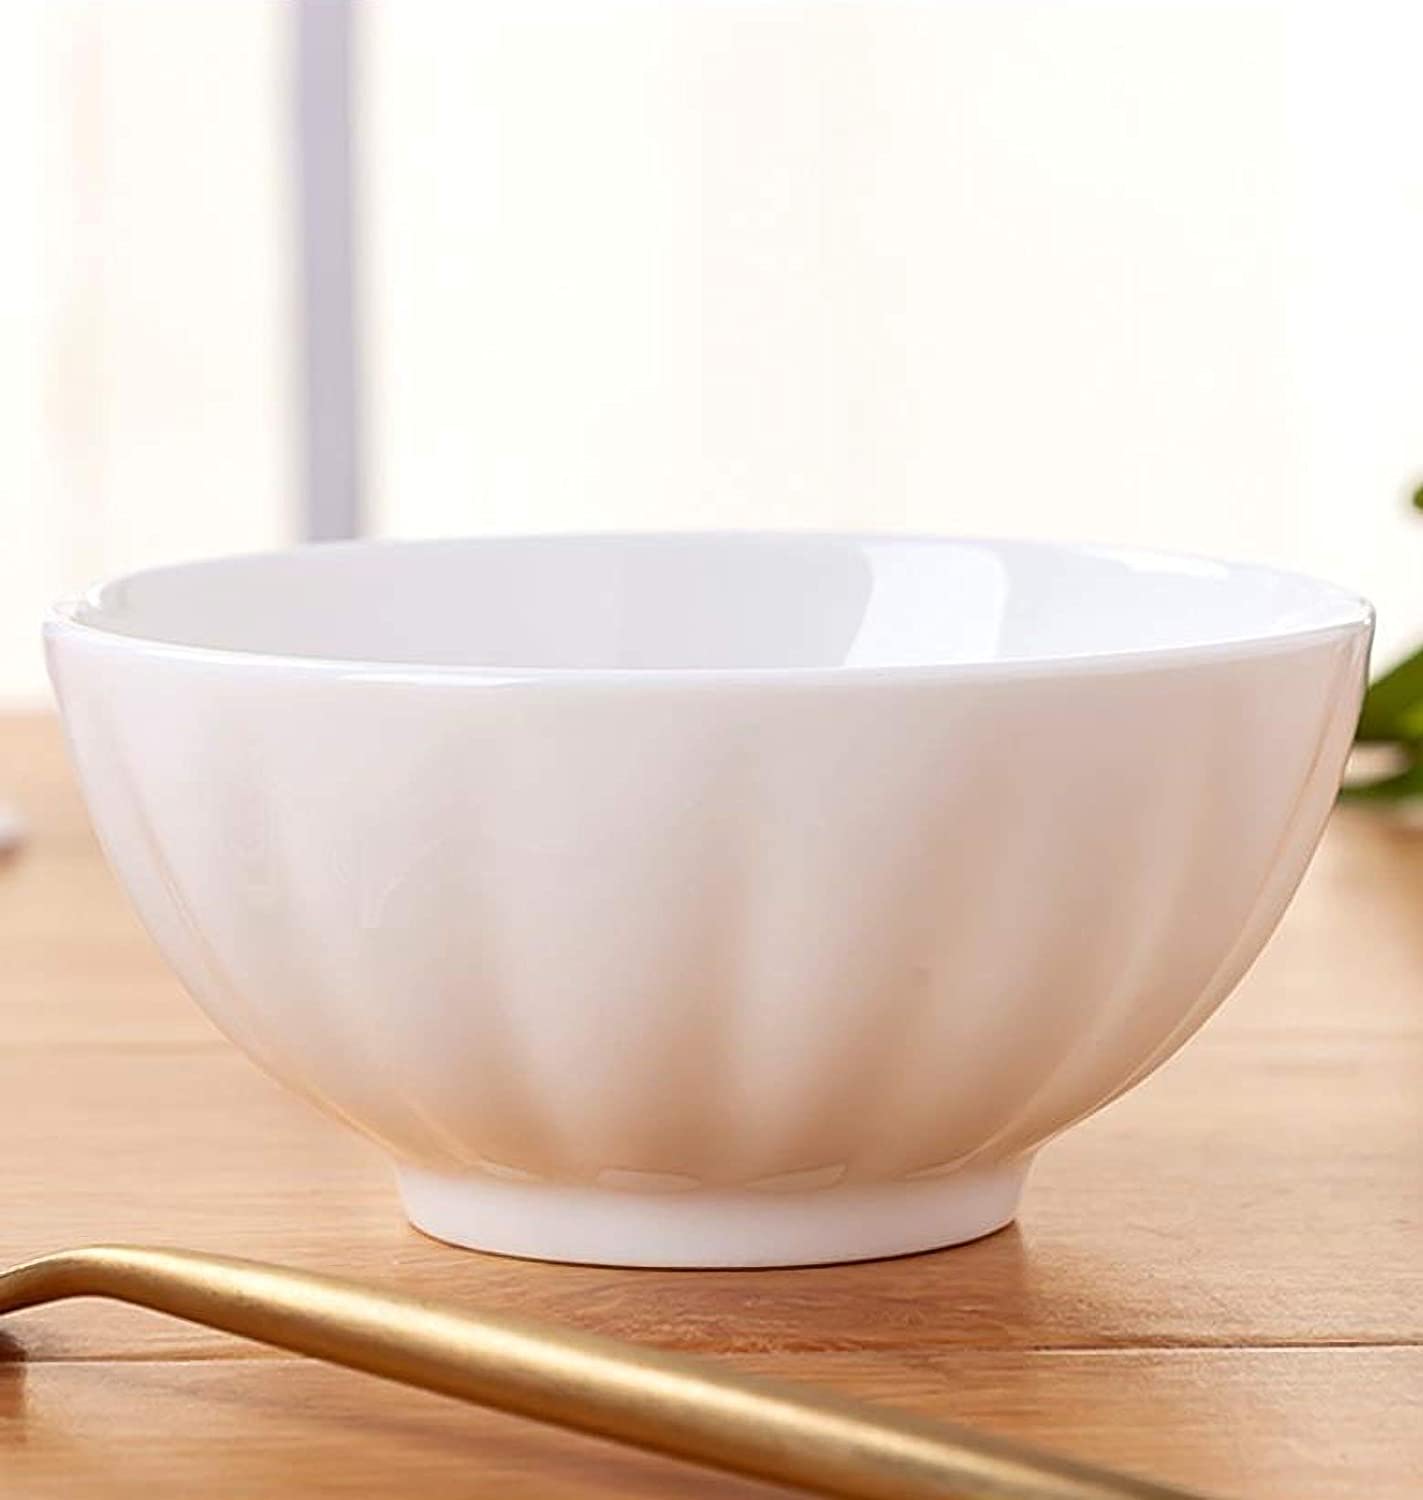 Lareina Large Soup Bowls for Kitchen, 8 Inch 60 oz Ceramic Bowls